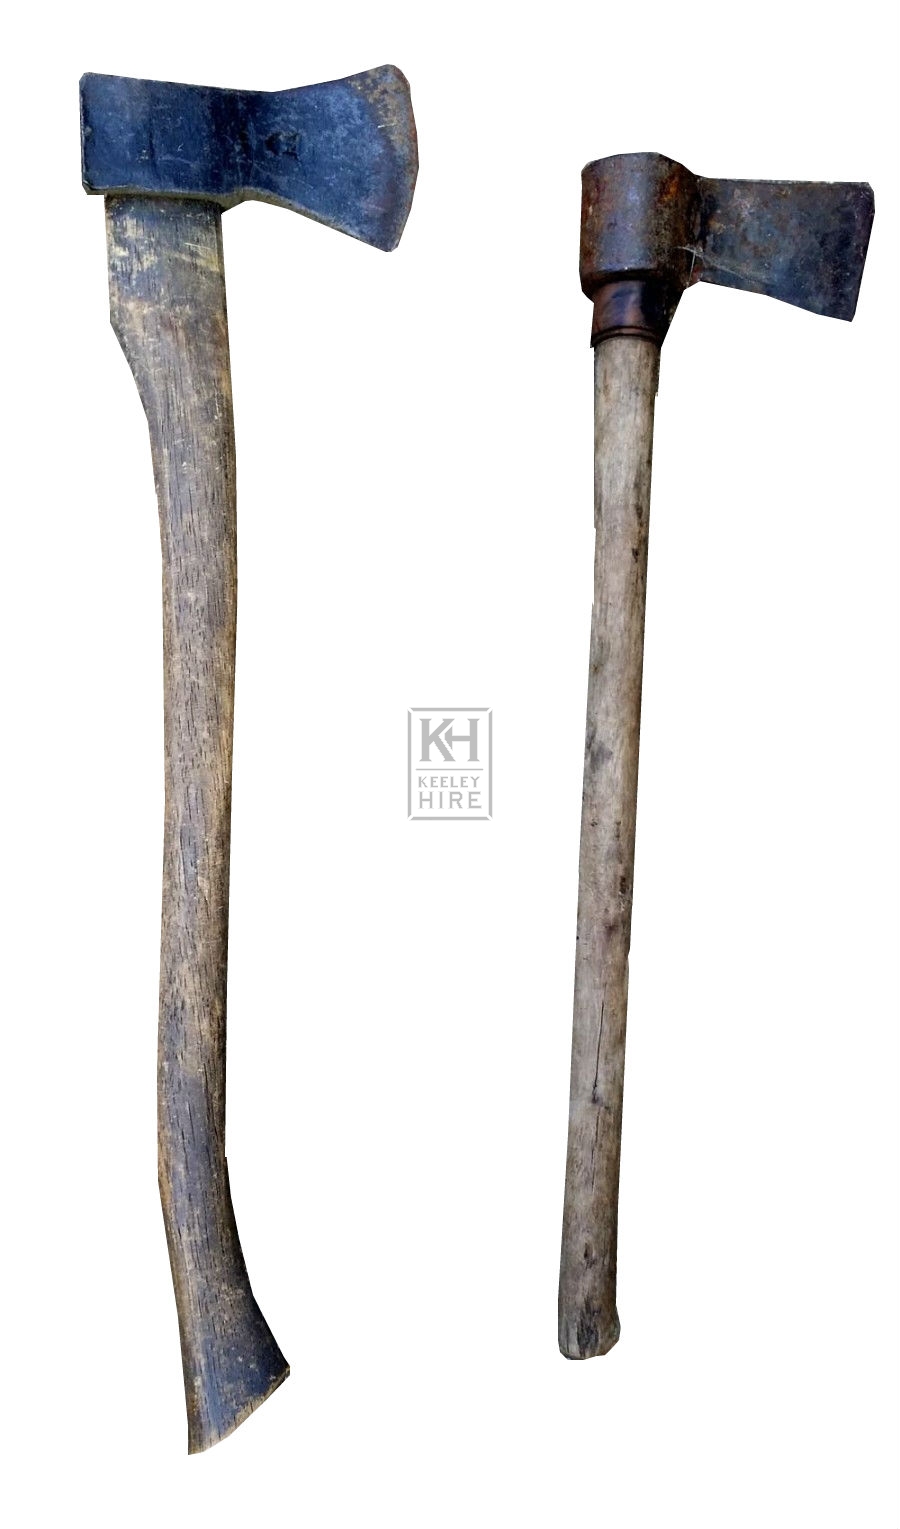 Assorted long handled axes